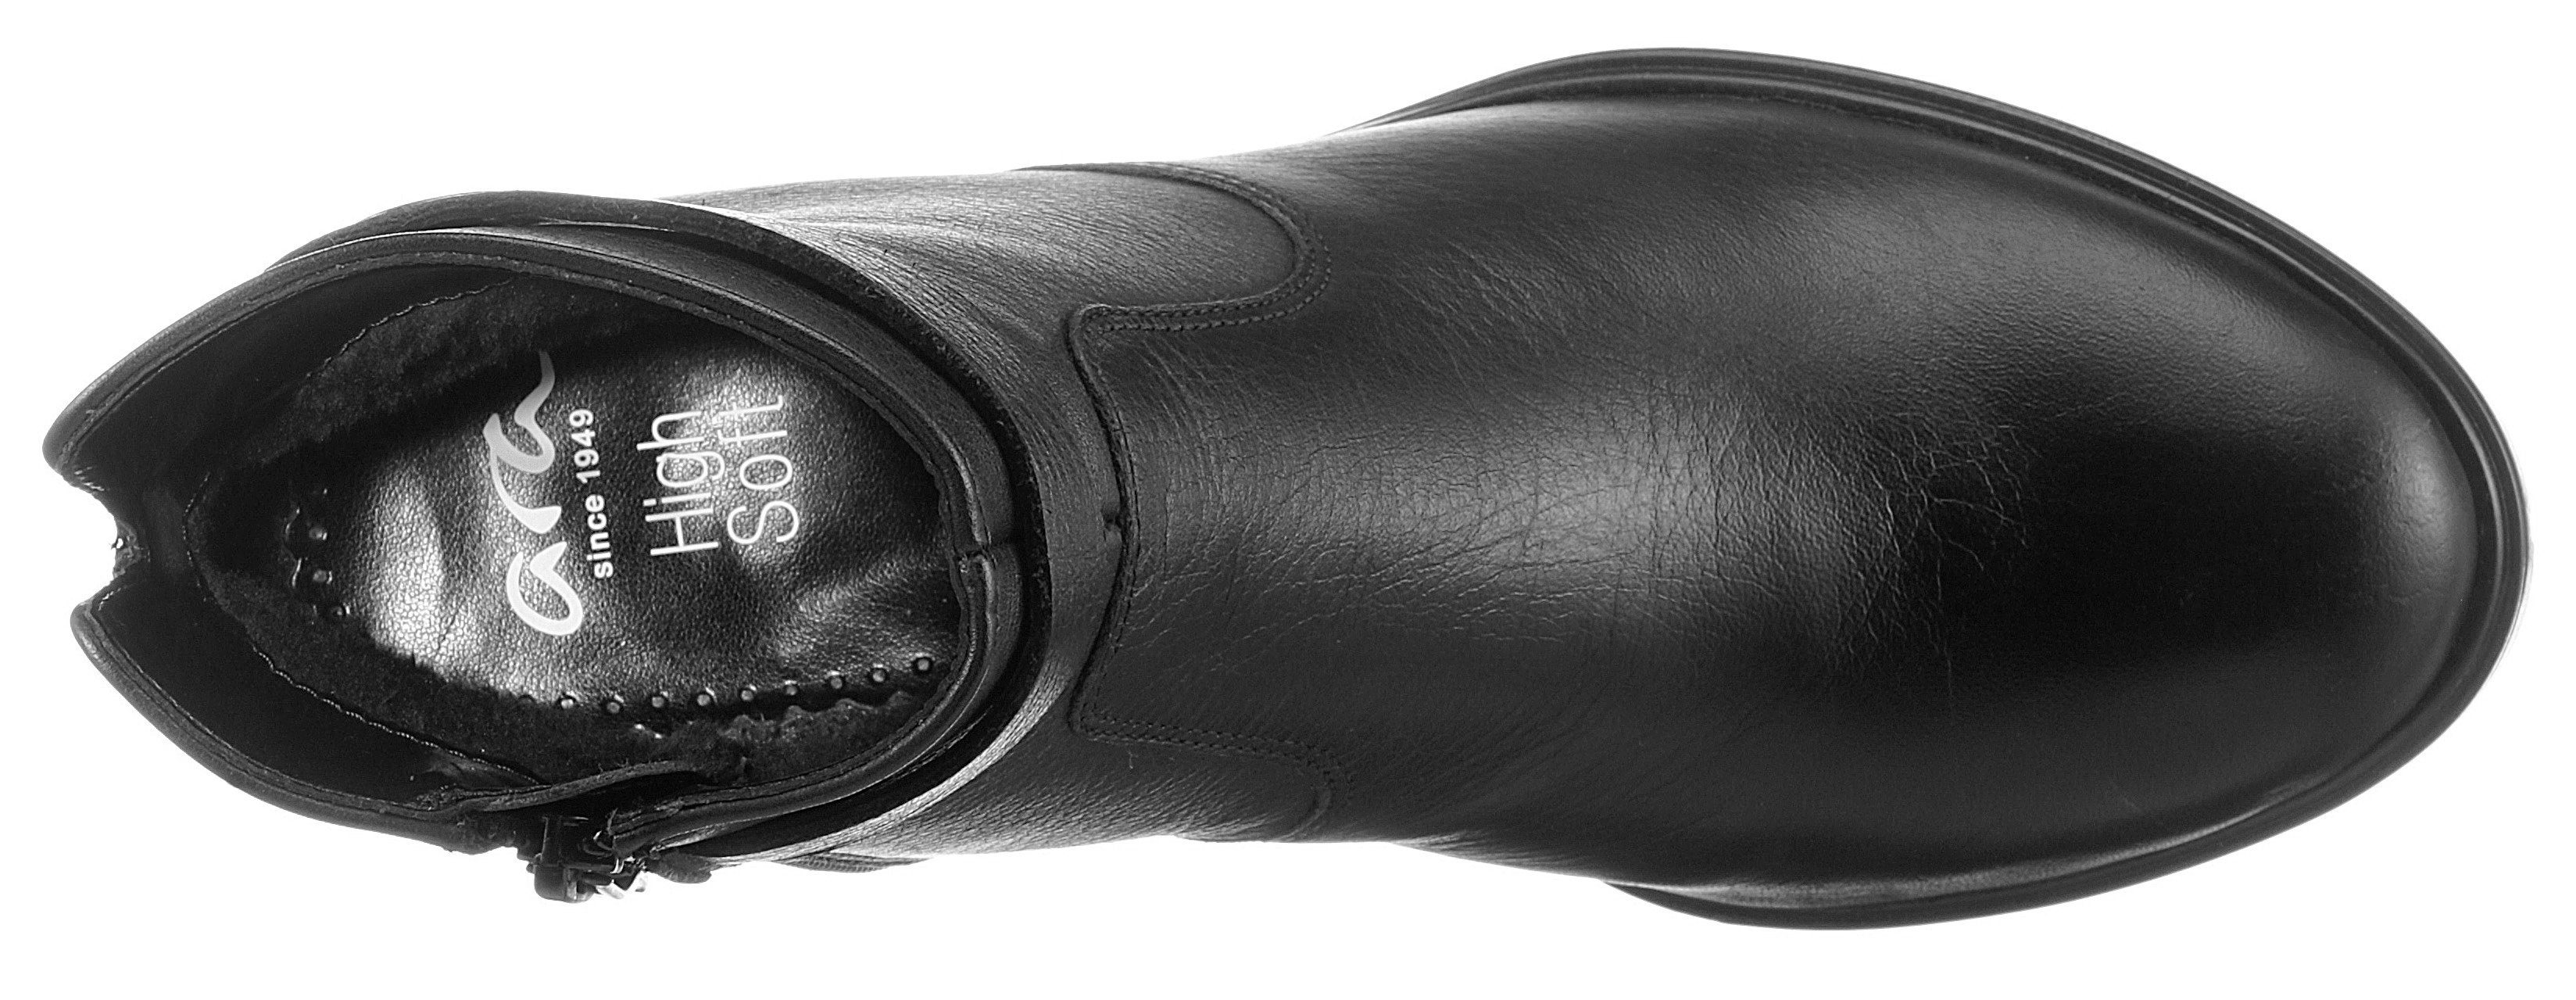 klassischer G-Weite in Stiefelette RONDA Optik, schwarz Ara